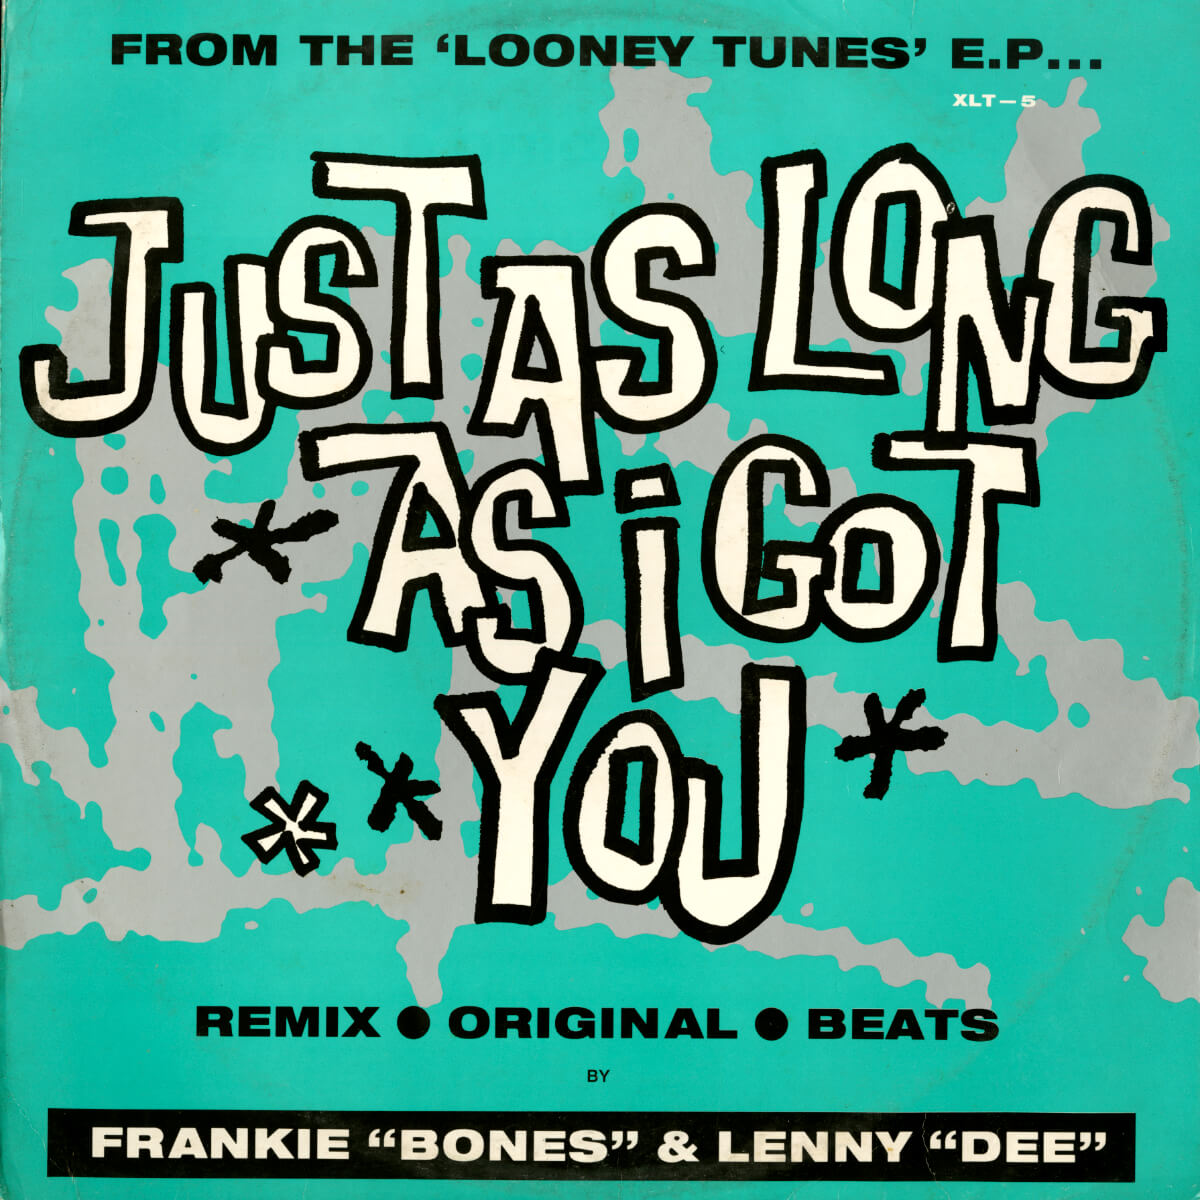 Frankie "Bones" & Lenny "Dee" – Just As Long As I Got You